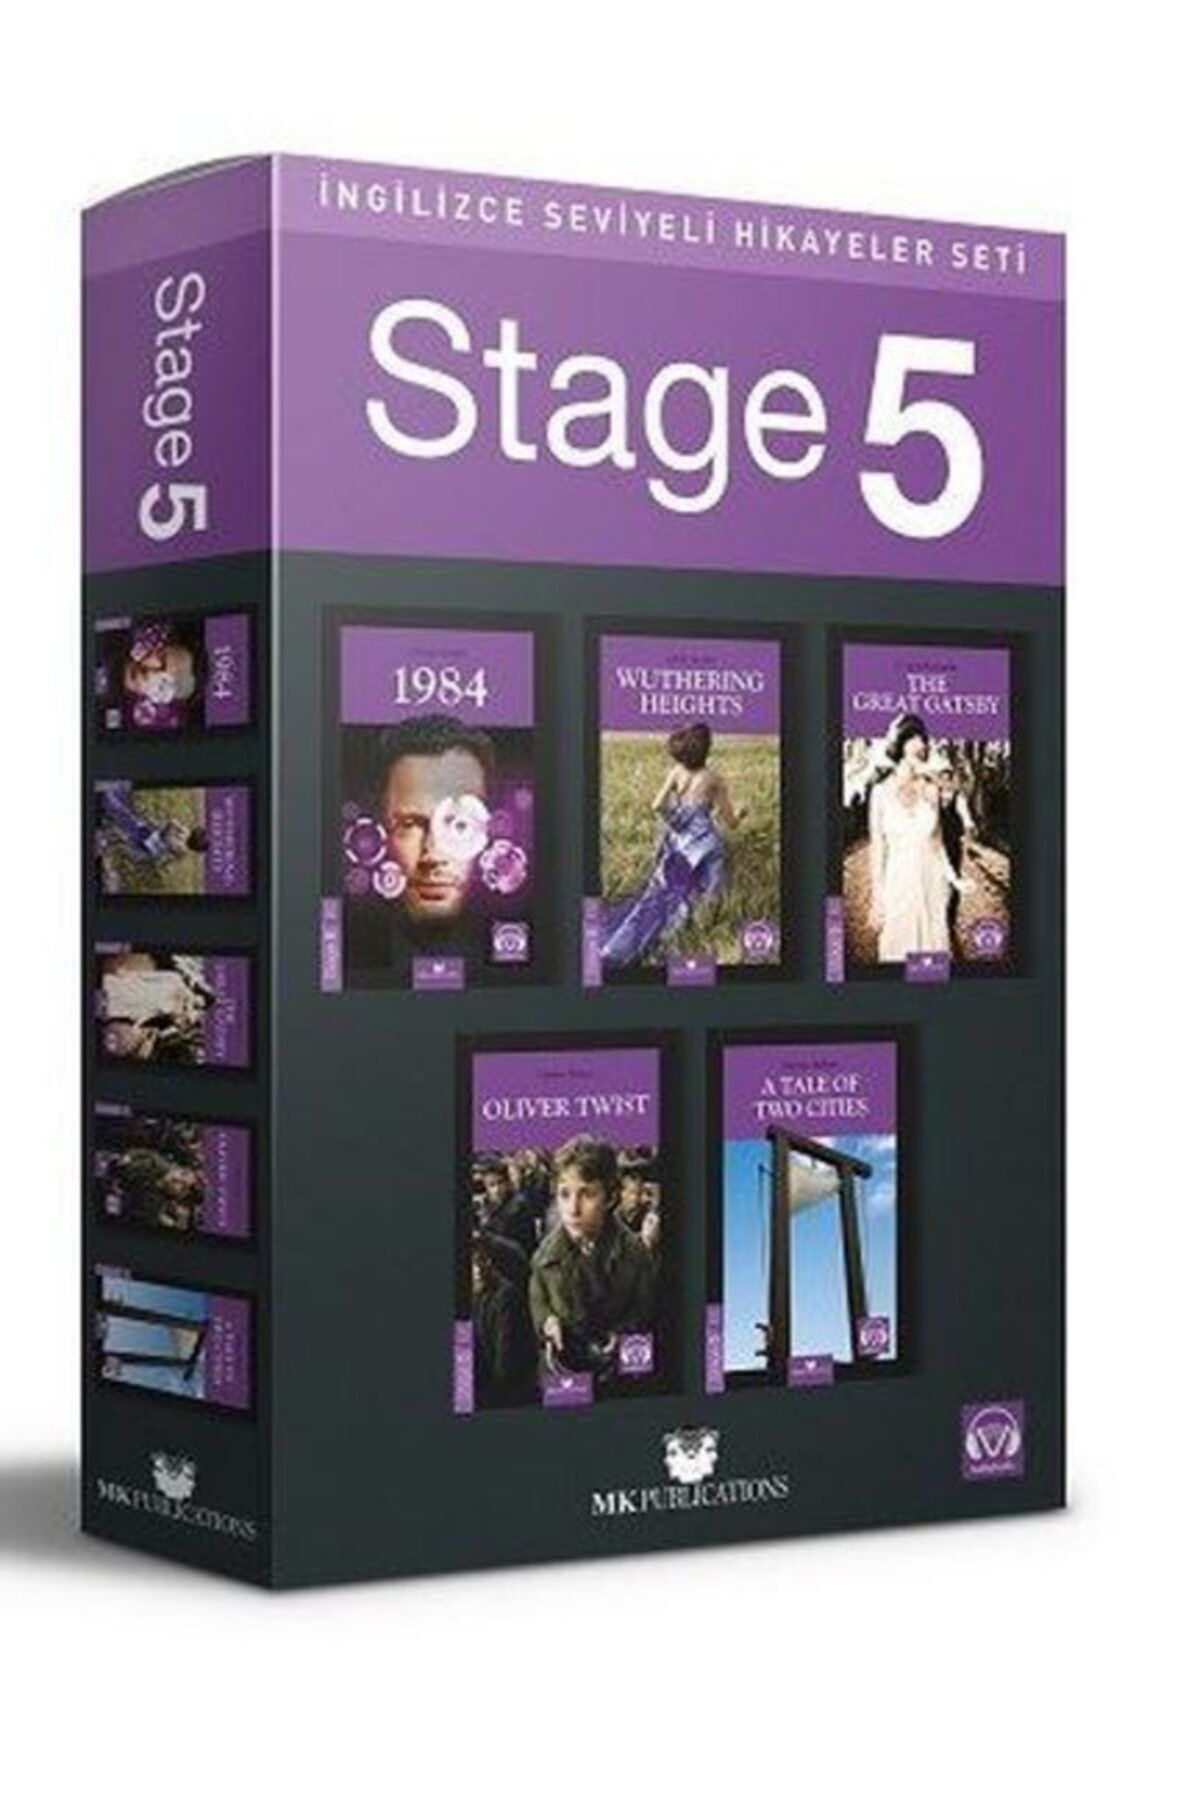 MK Publications Ingilizce Hikaye Seti Stage 5 Kutulu Set